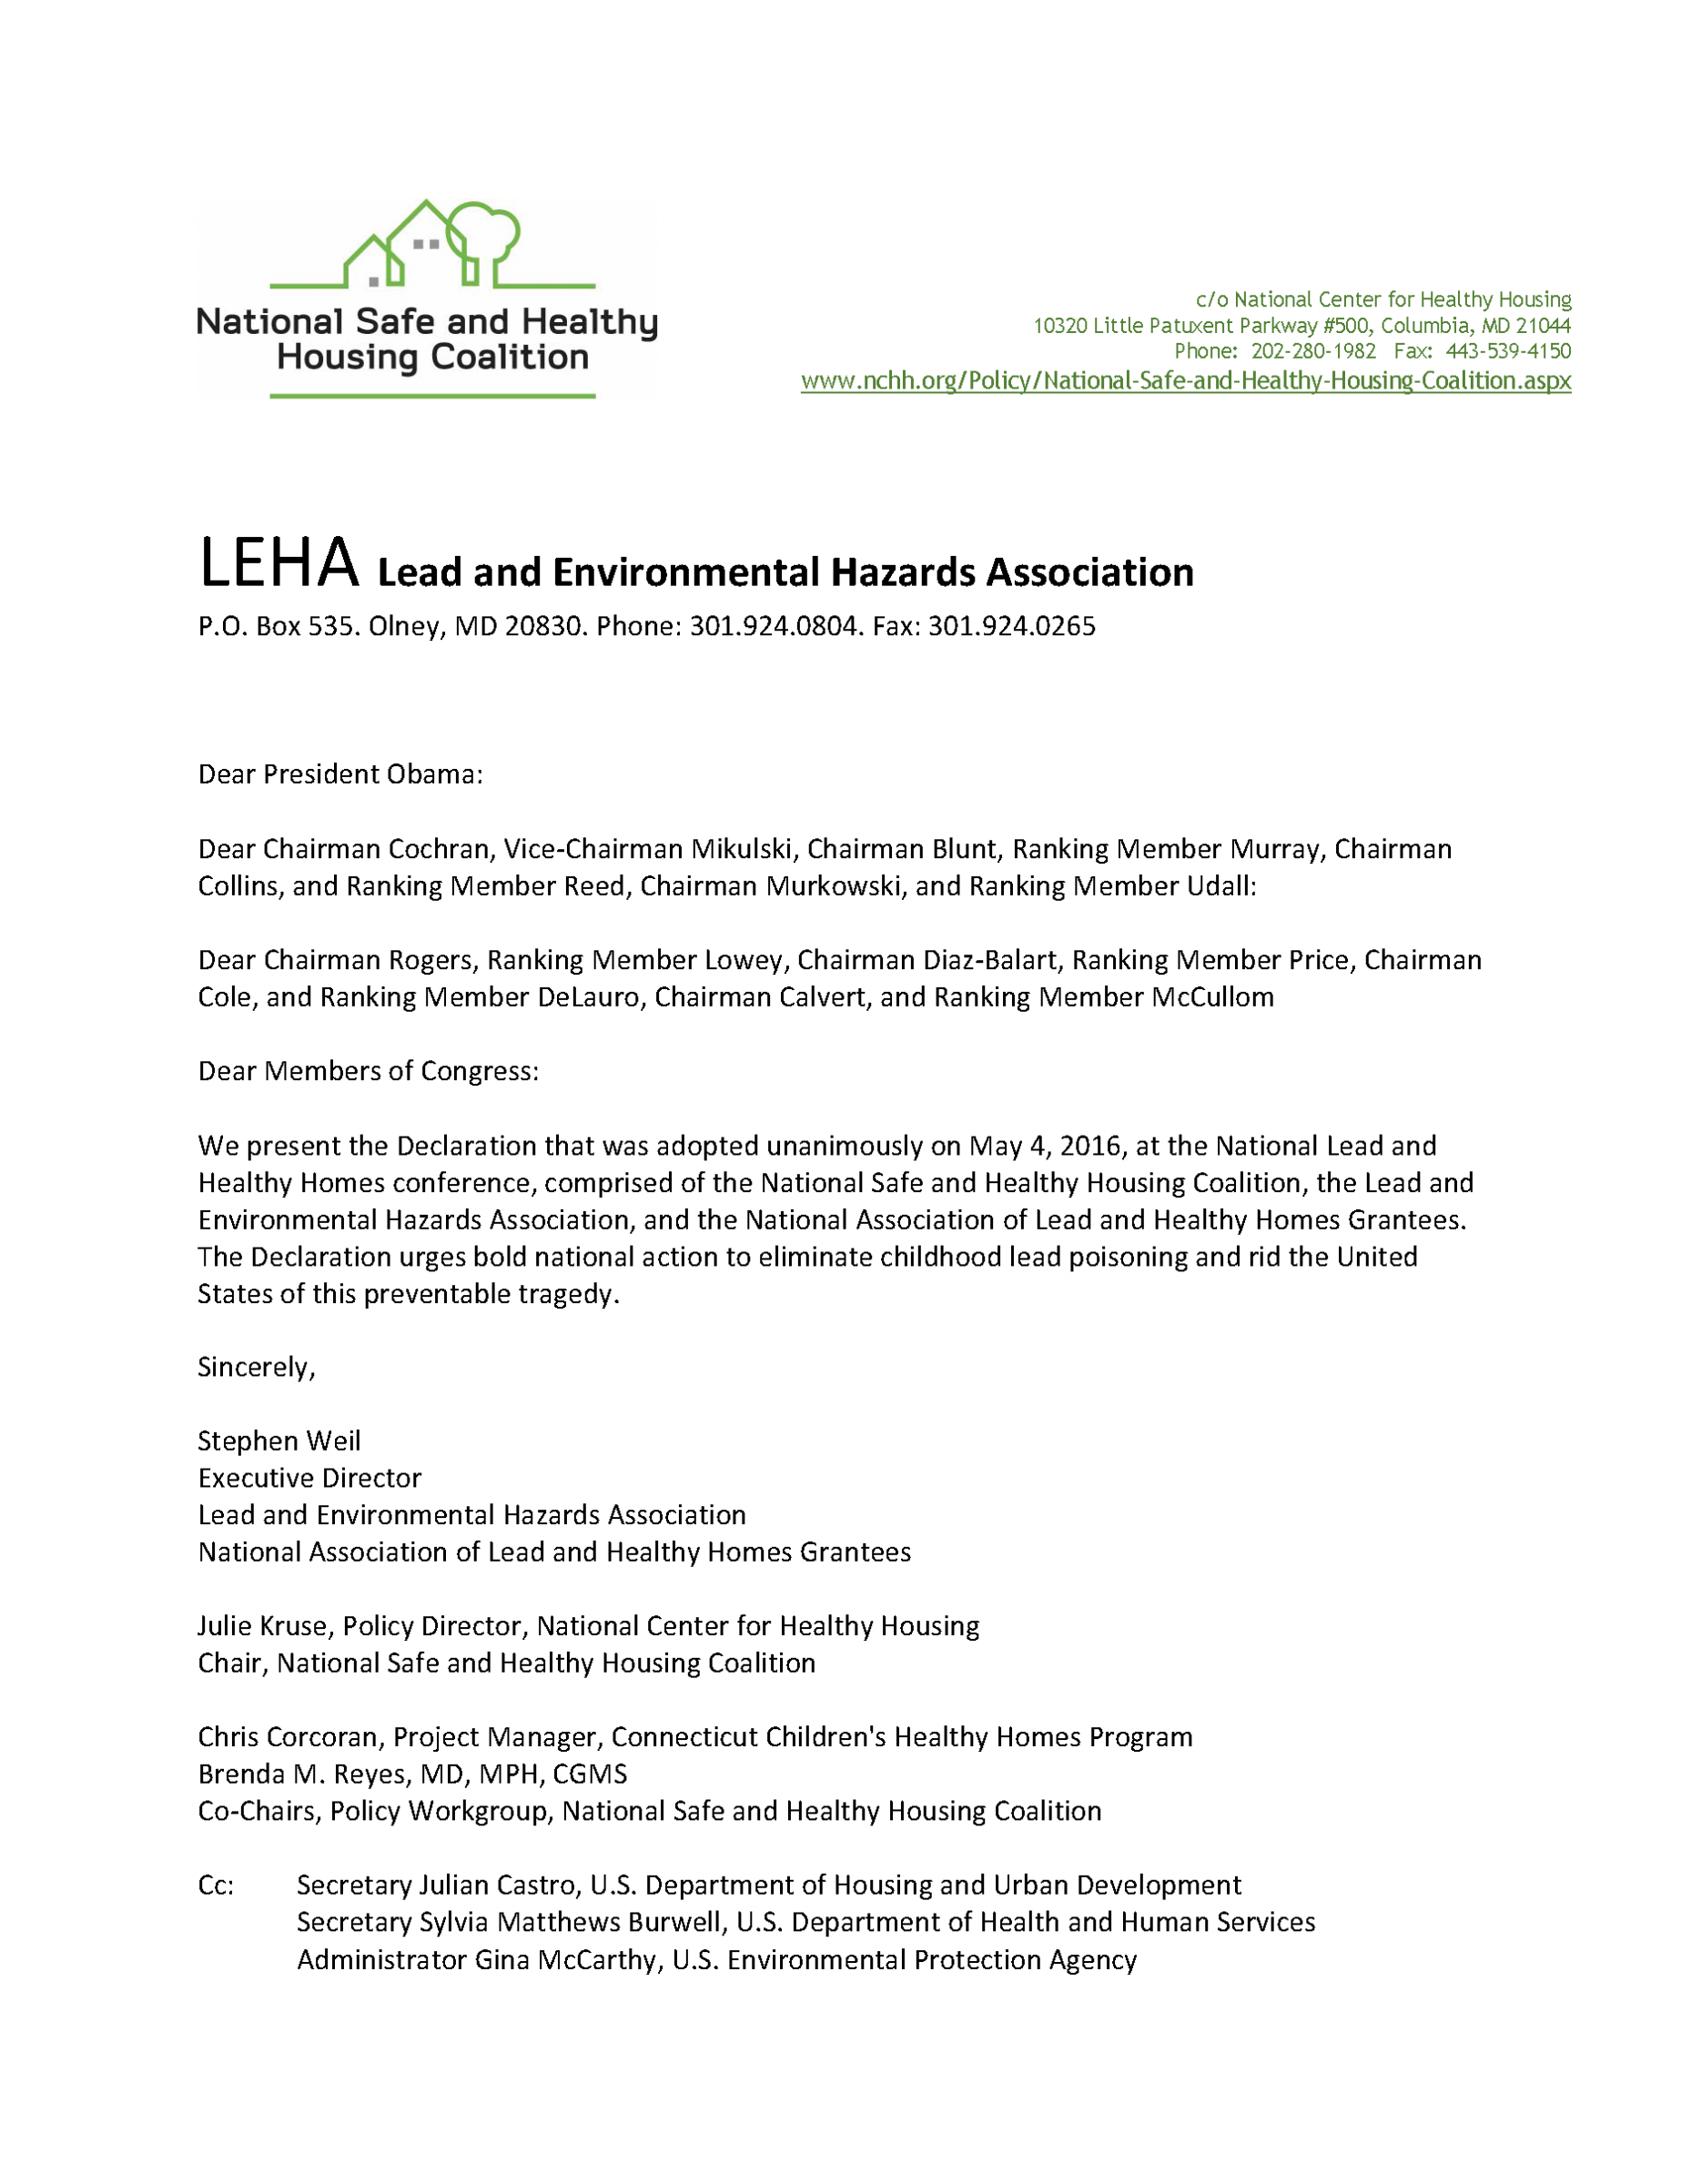 Letter: 2016.xx.xx - Declaration of Lead Poisoning Prevention Delegates [NSHHC]